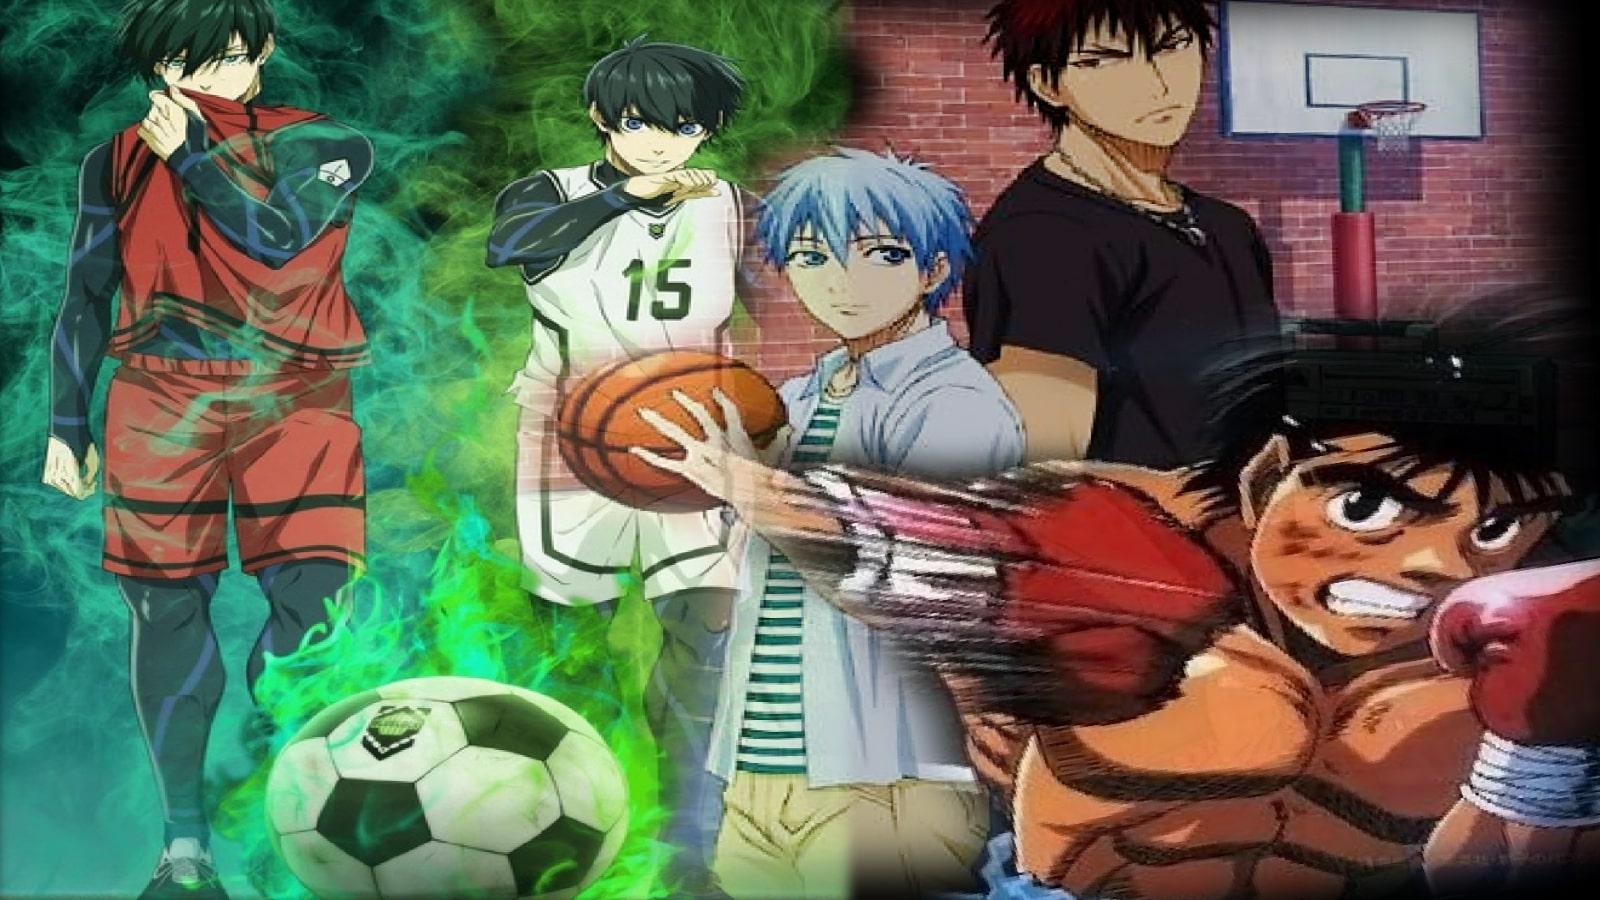 Crunchyroll Streams Kuroko's Basketball The Movie LAST GAME